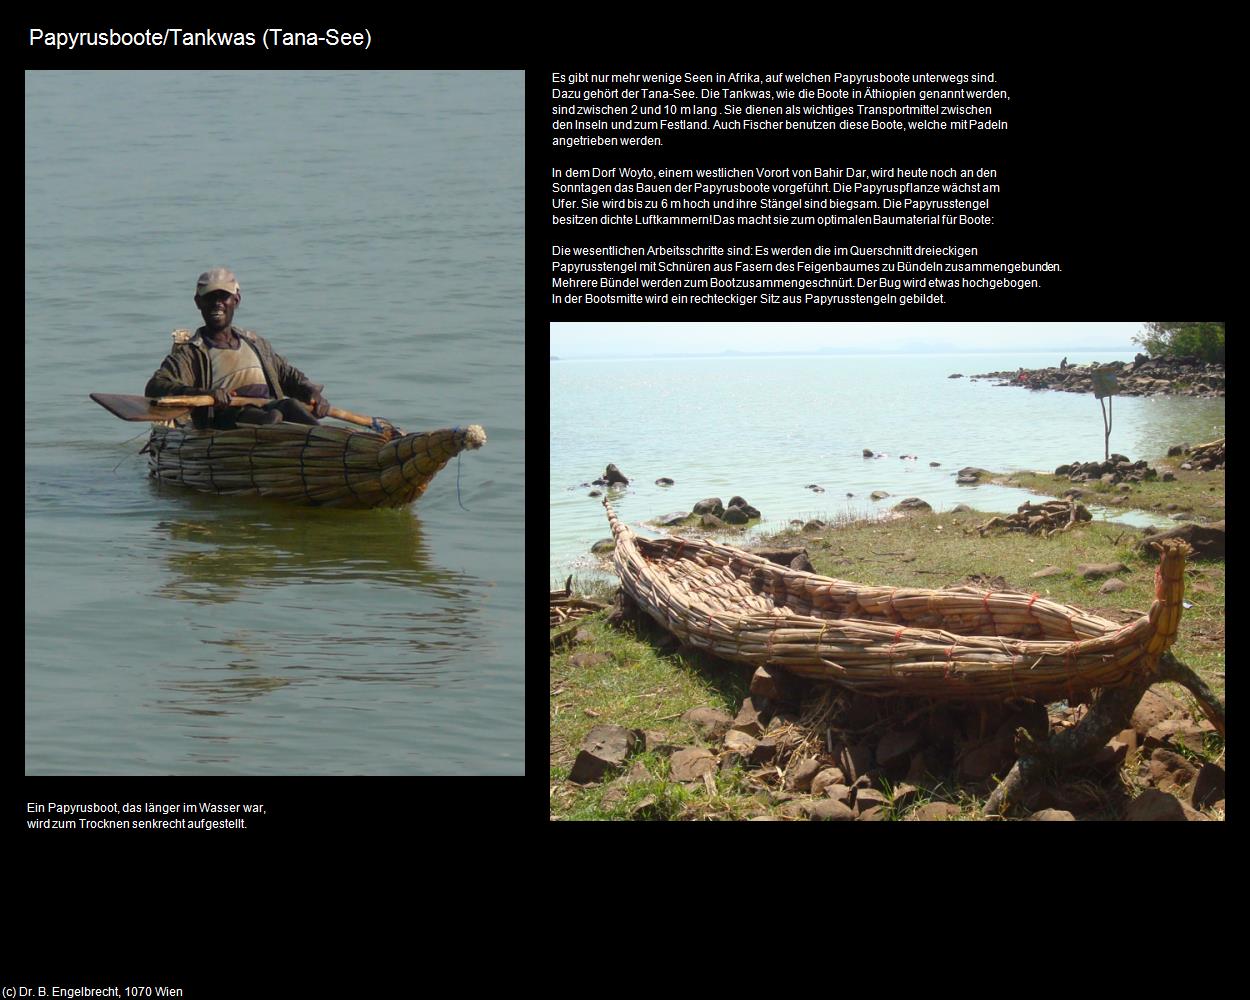 Papyrusboote/Tankwas  (Tana-See) in Äthiopien